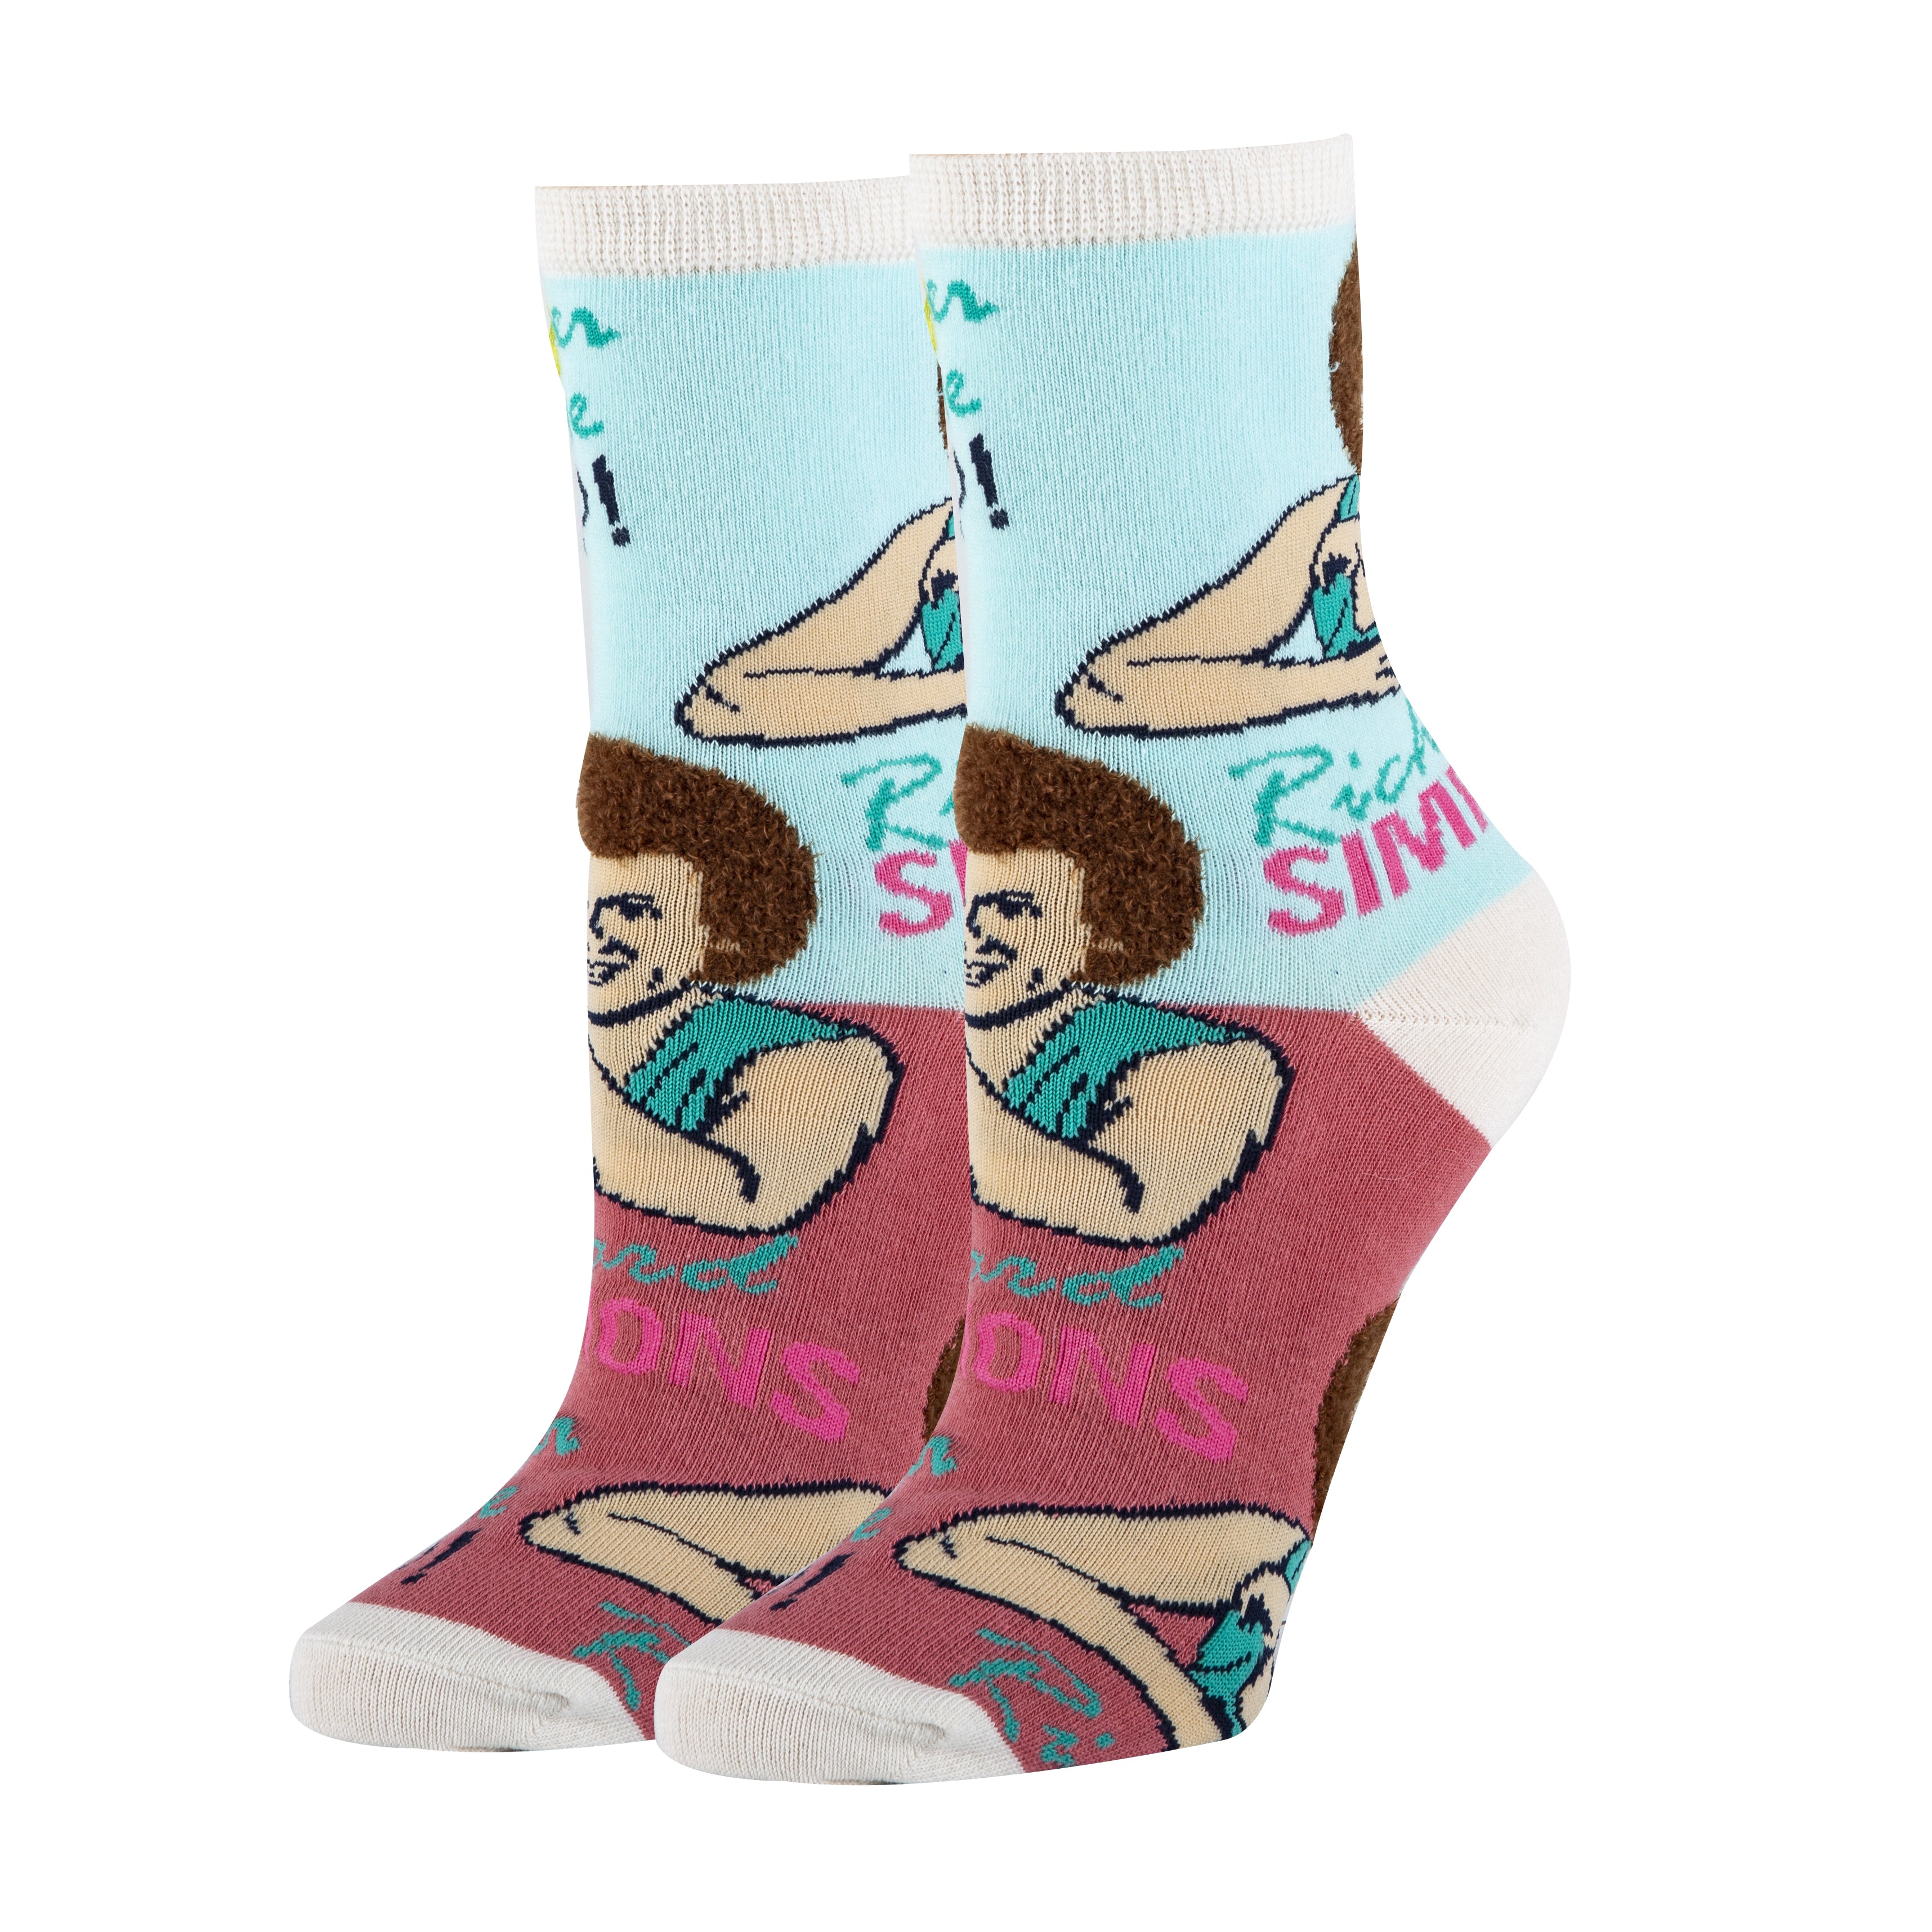  Humor Us Home Goods Funny Socks for Women - Pink Cute